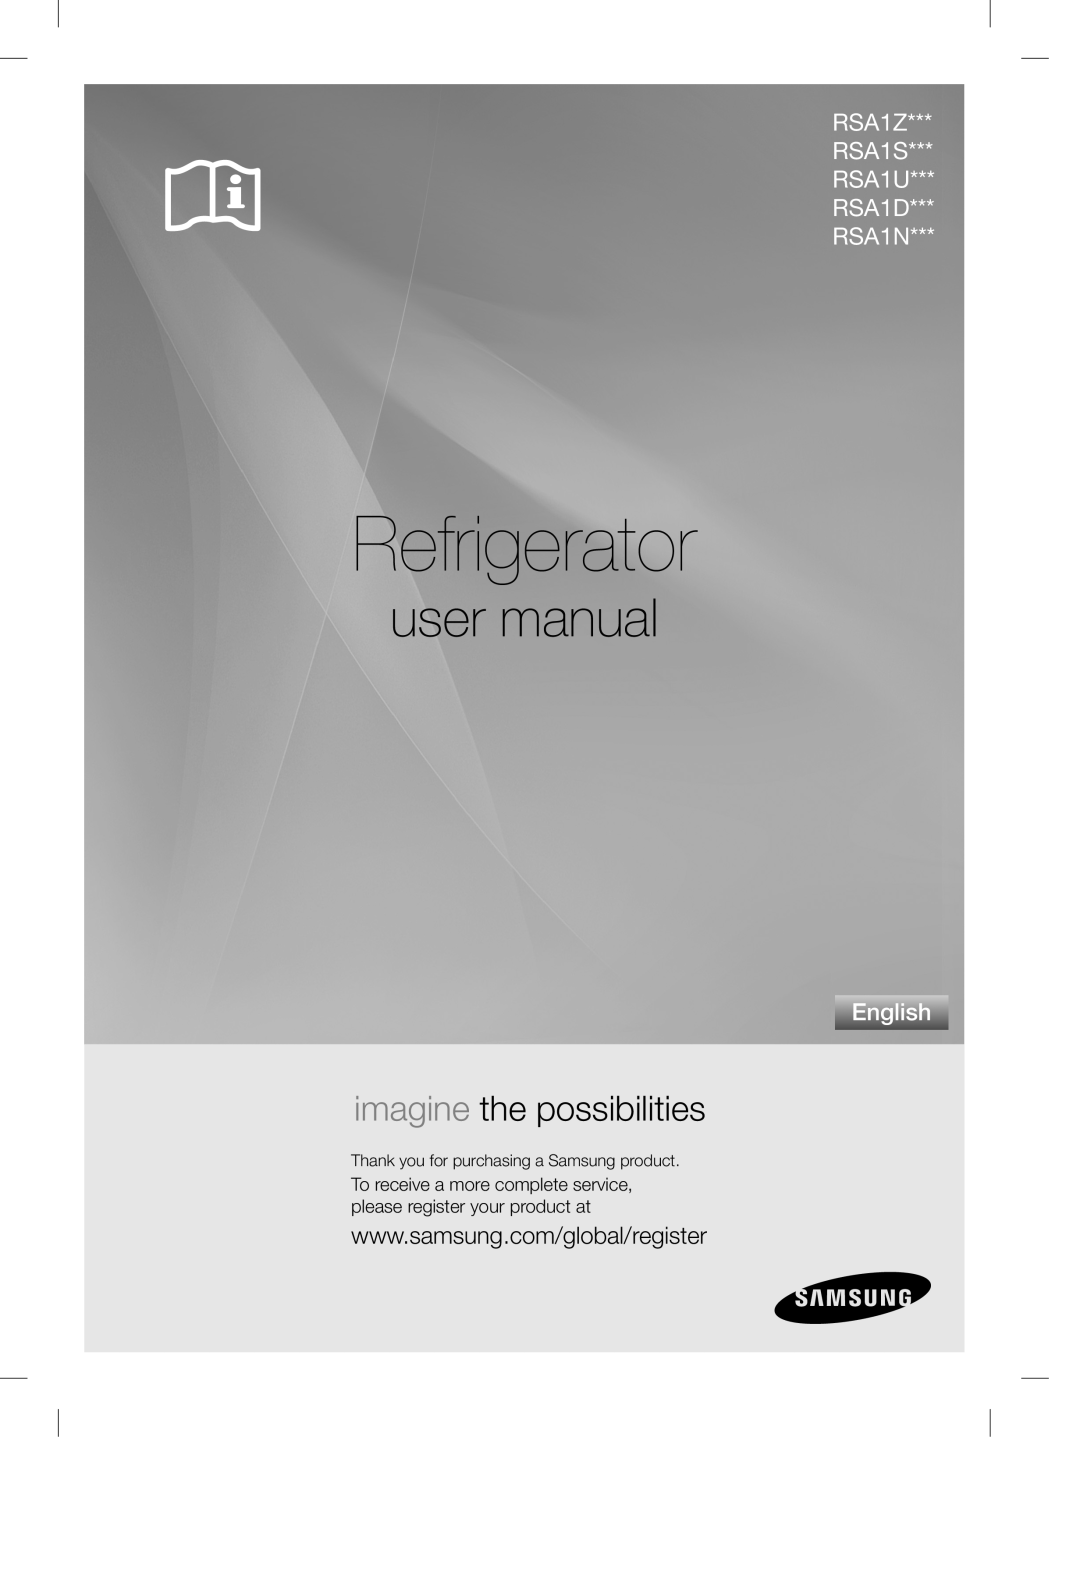 Samsung RSA1U***, RSA1Z*** user manual Refrigerator, imagine the possibilities, RSA1Z RSA1S RSA1U RSA1D RSA1N, English 